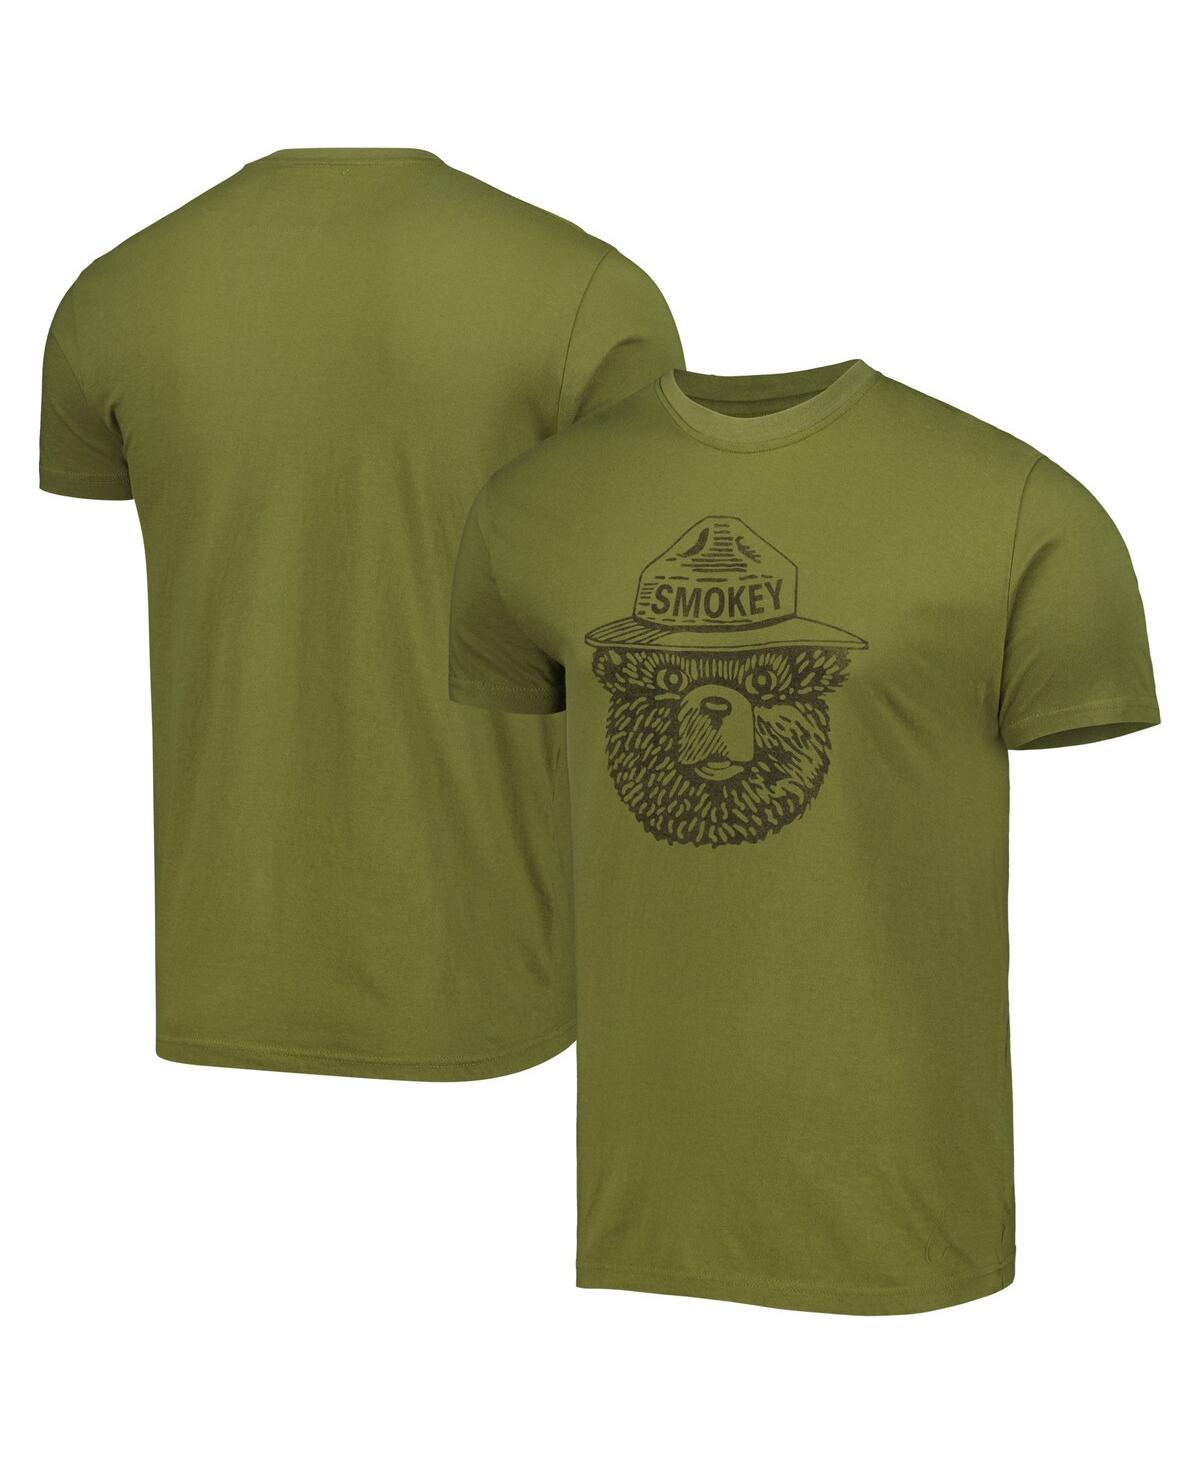 Men's and Women's American Needle Green Smokey the Bear Brass Tacks T-shirt - Green